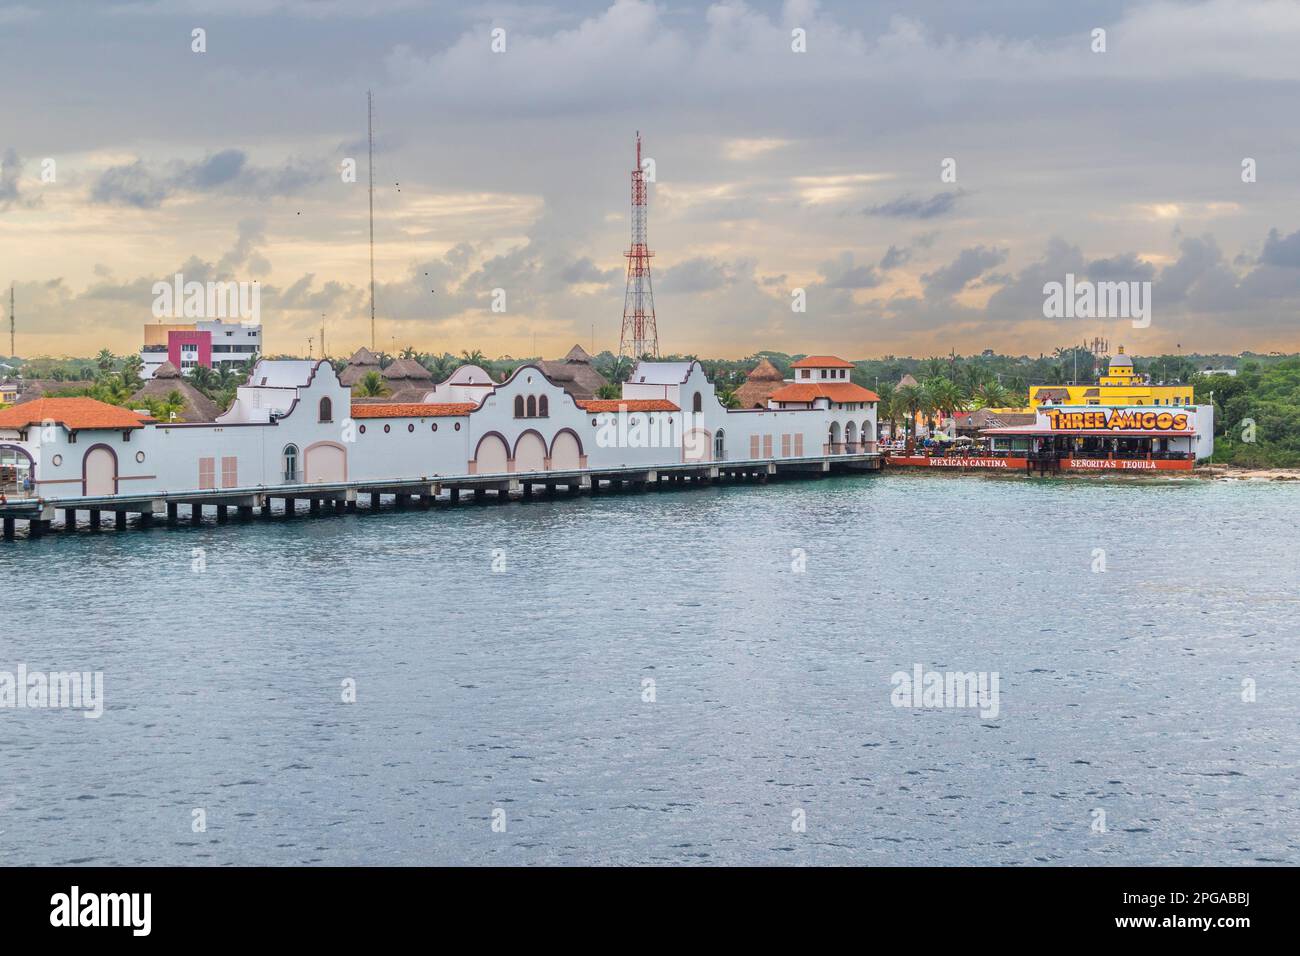 Cozumel Cruise Port and Tourist Destination. Stock Photo